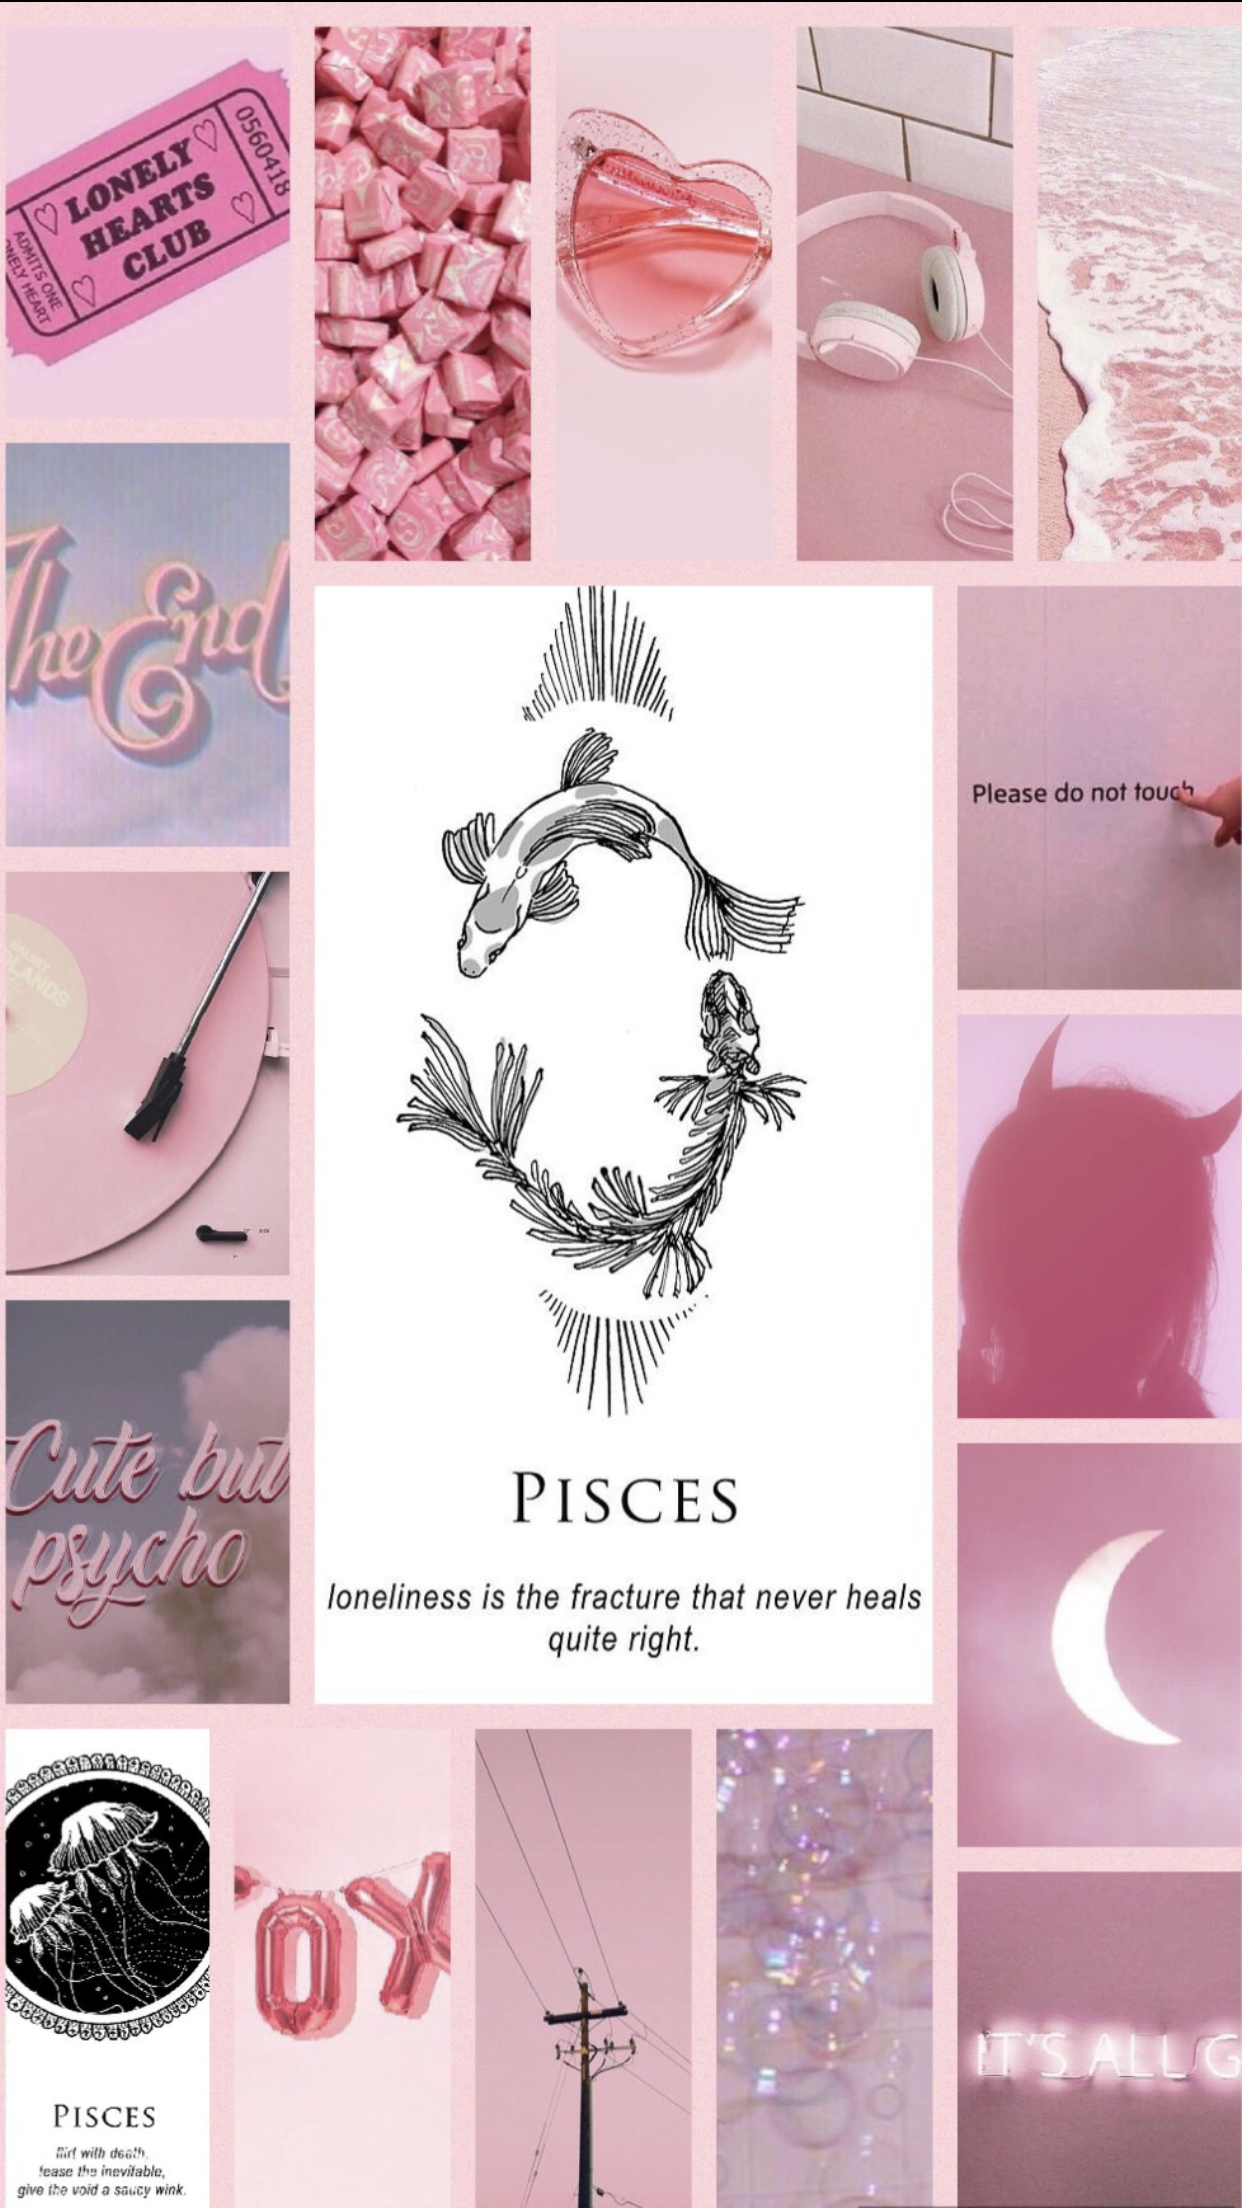 Pisces aesthetic wallpaper. Aquarius aesthetic, Zodiac signs, Aesthetic iphone wallpaper